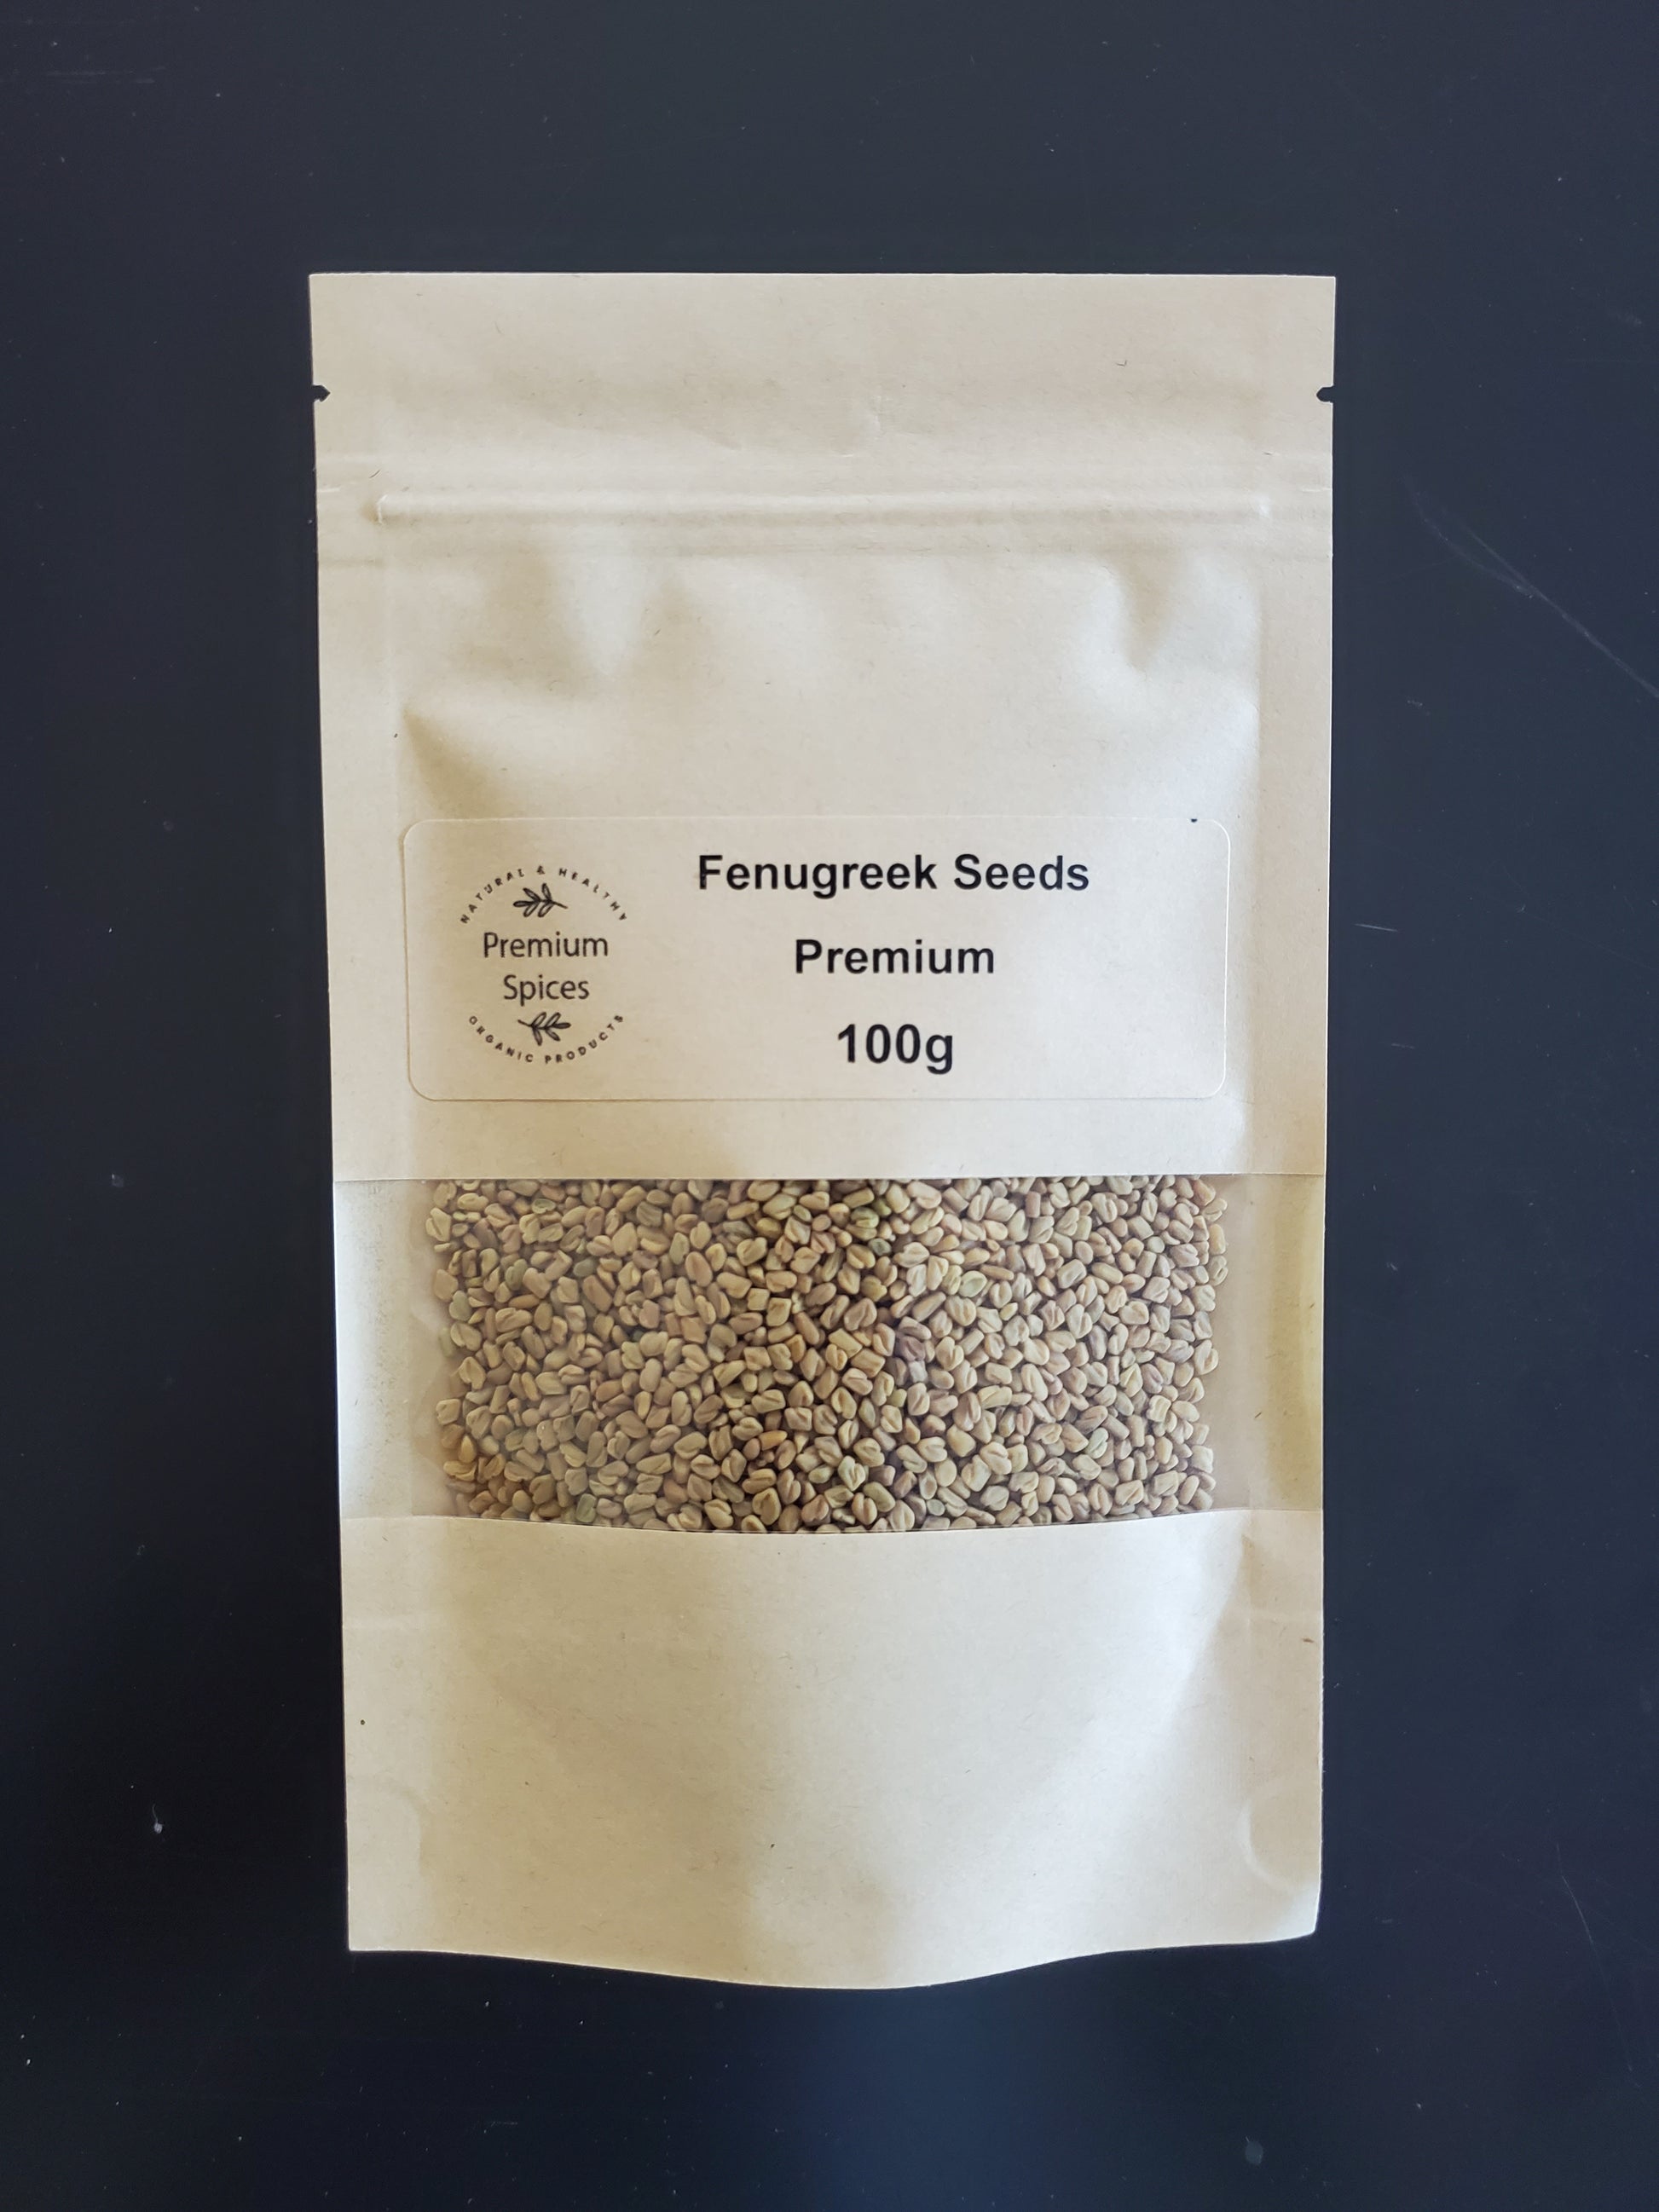 Fenugreek Seeds NZ | Fresh Fenugreek | Indian Spices, shows a 100g pack